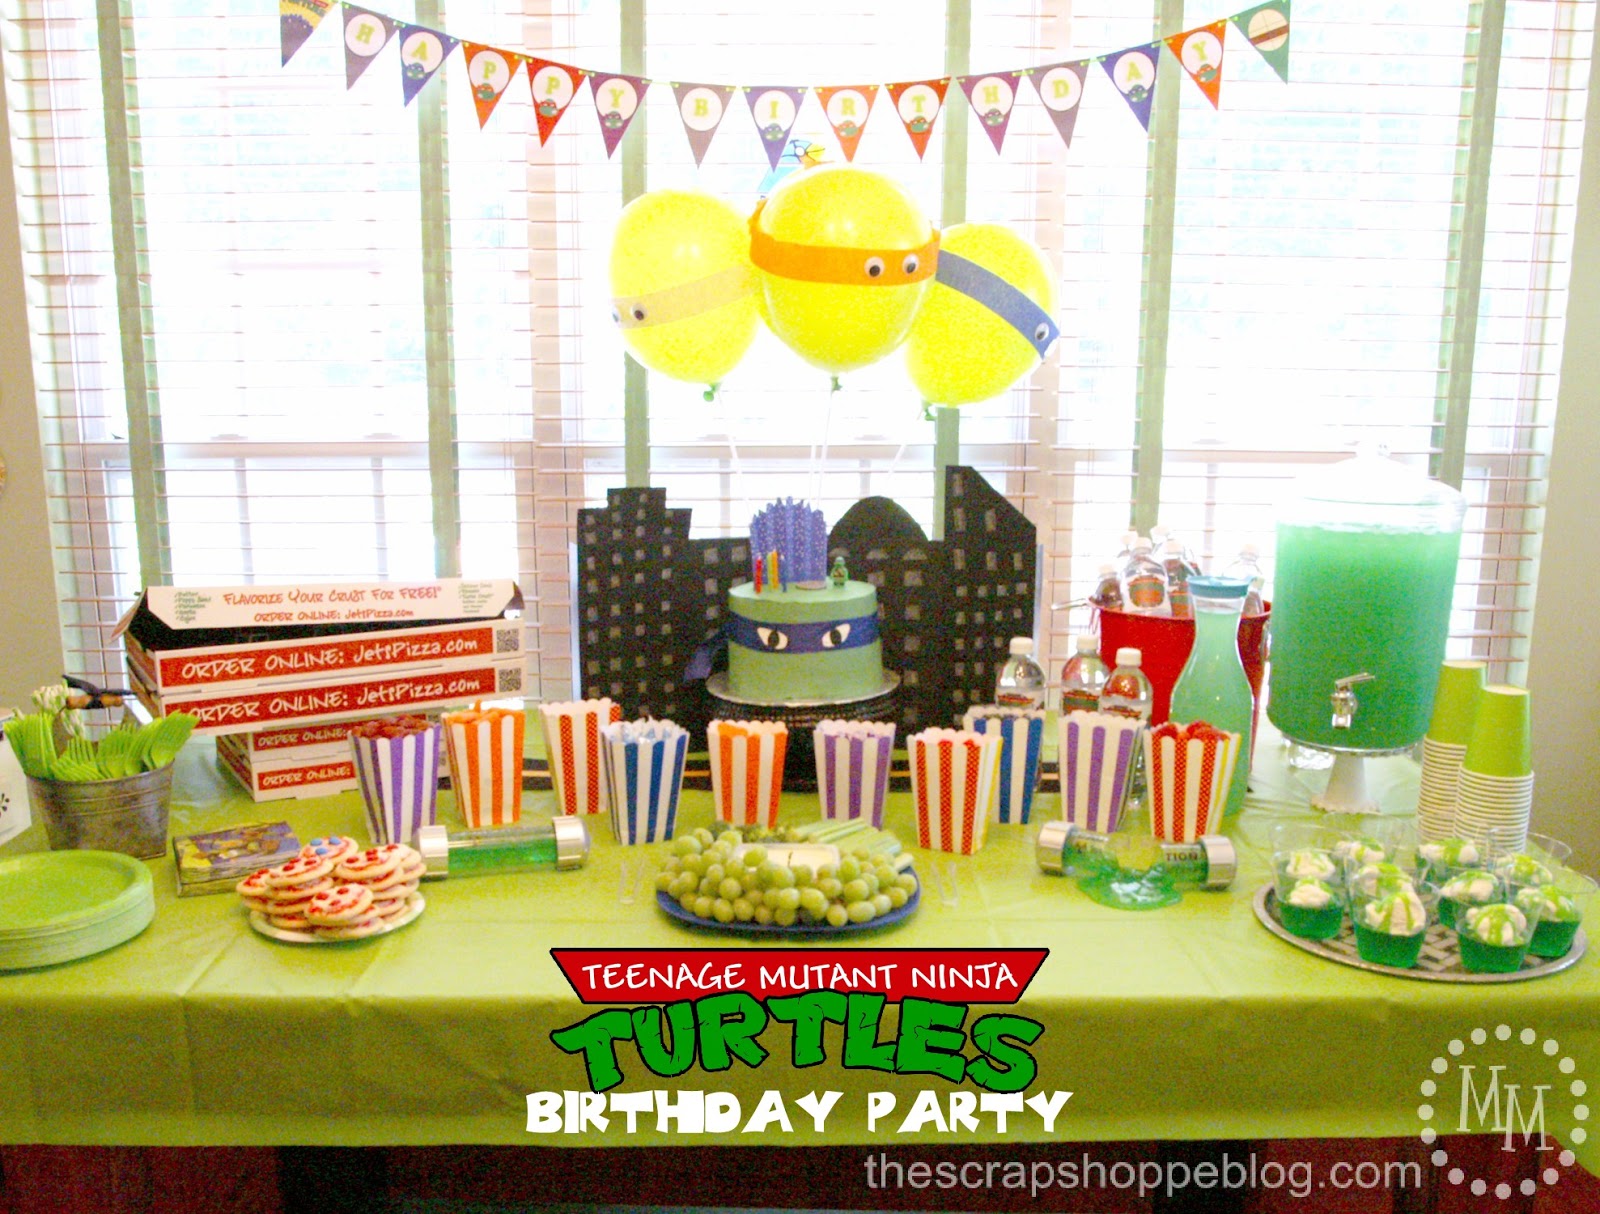 Teenage Mutant Ninja Turtle (TMNT) Birthday Party - The Scrap Shoppe